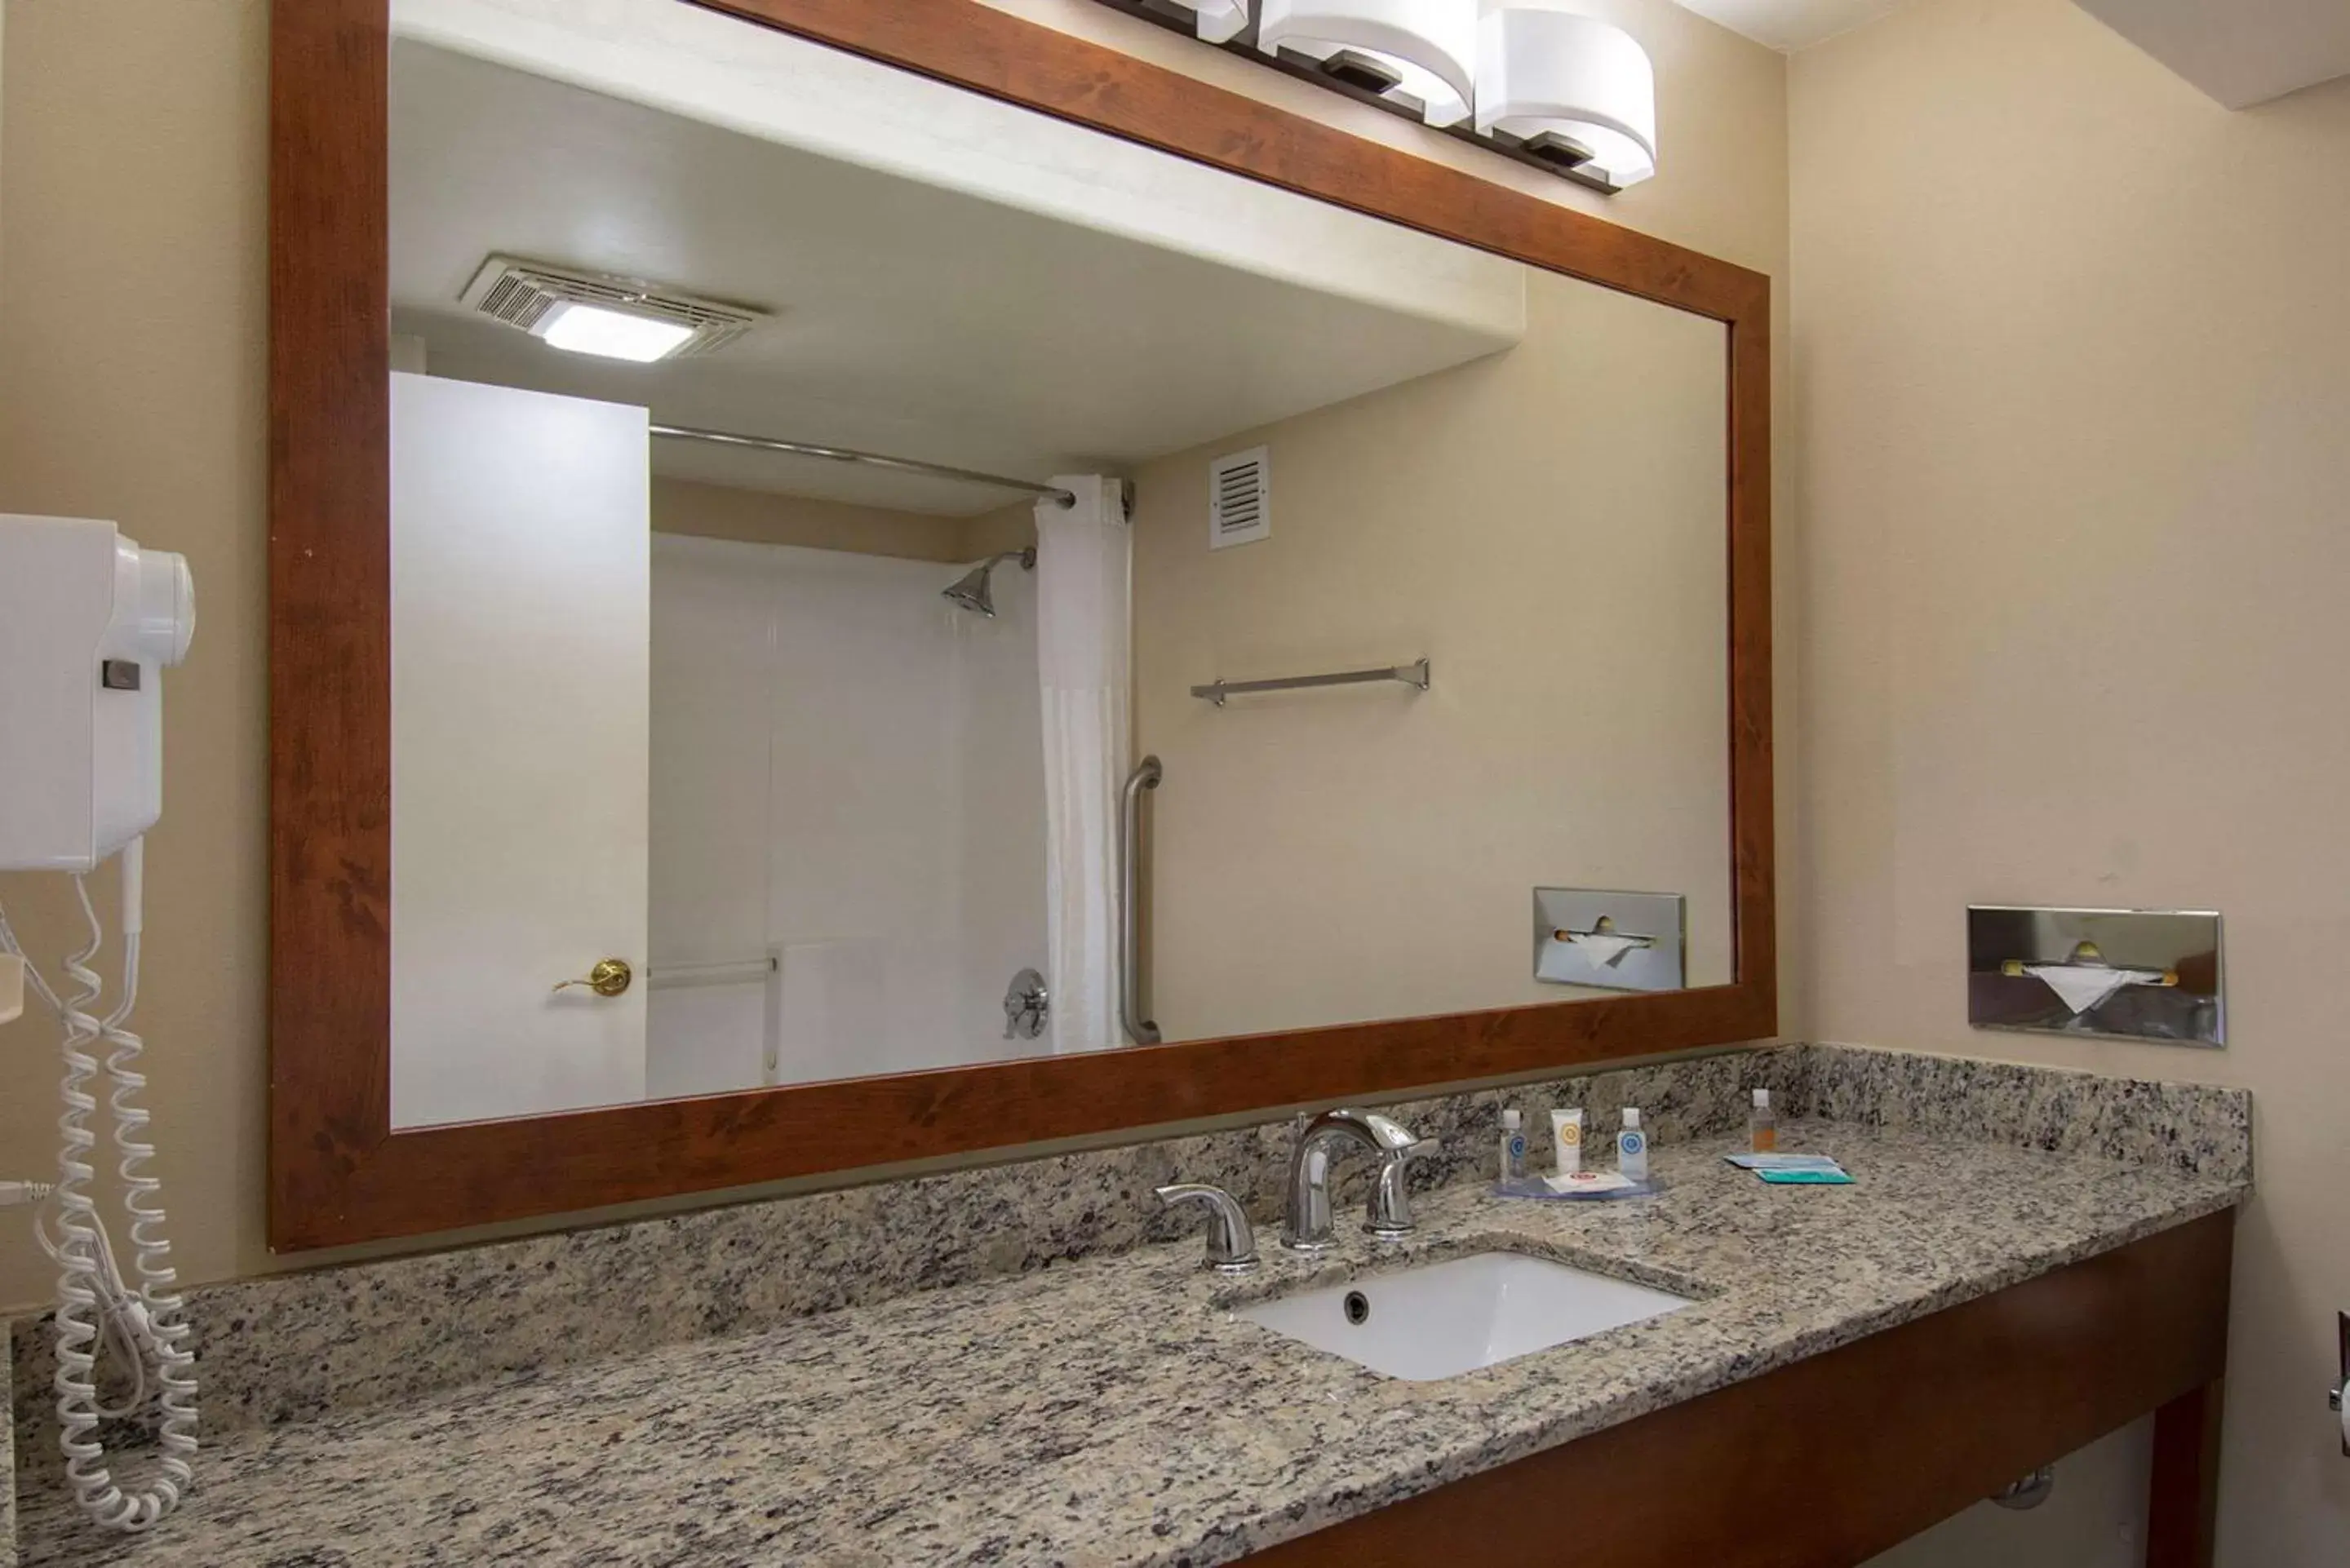 Photo of the whole room, Bathroom in Comfort Inn Santa Fe